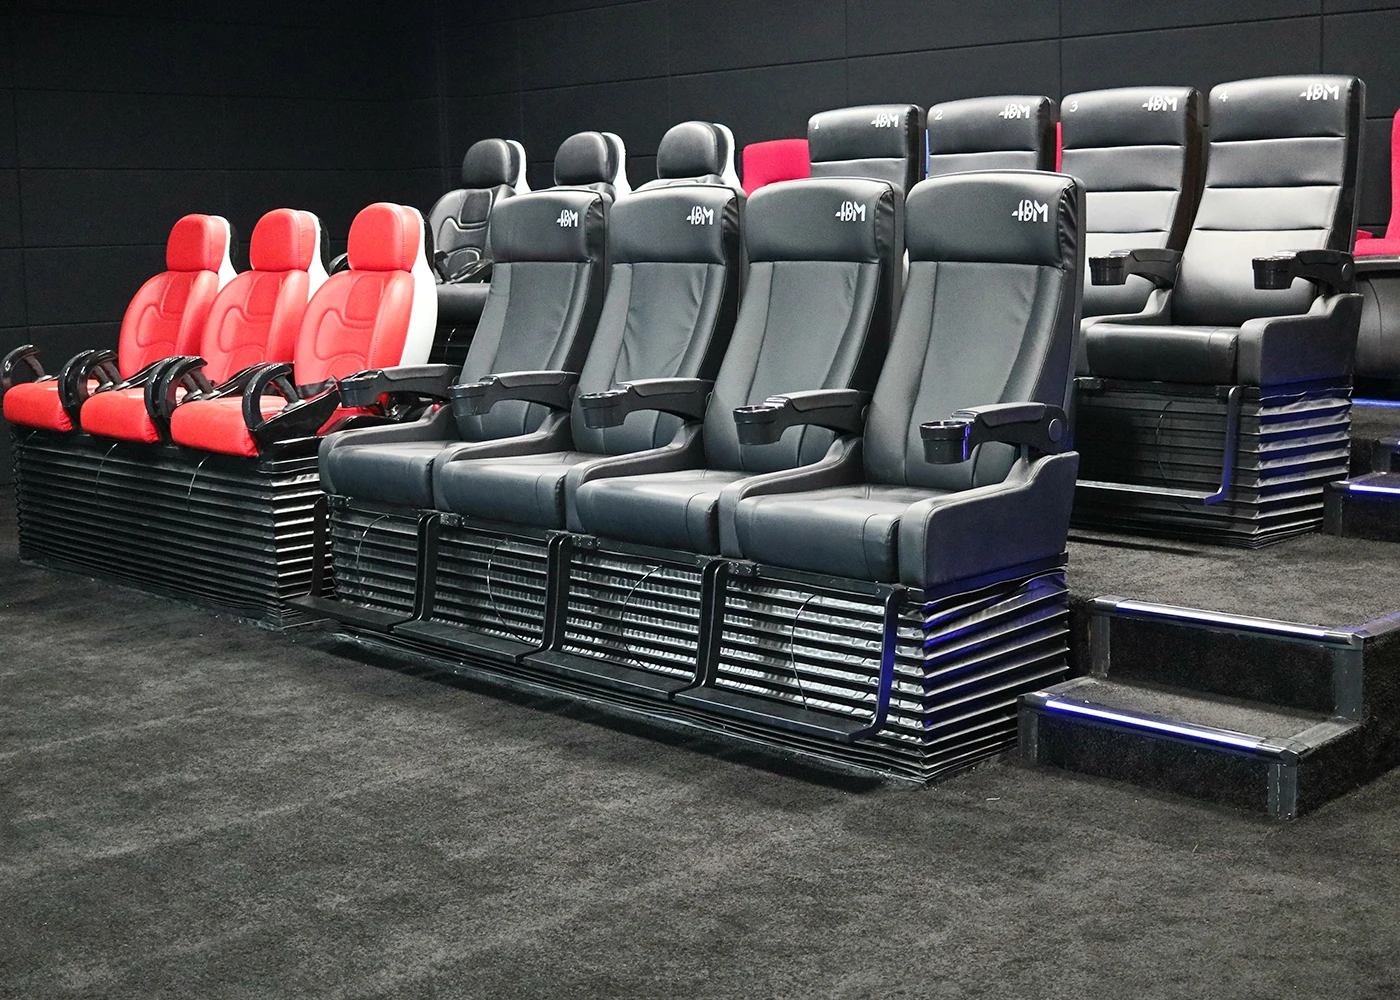 4D cinema room